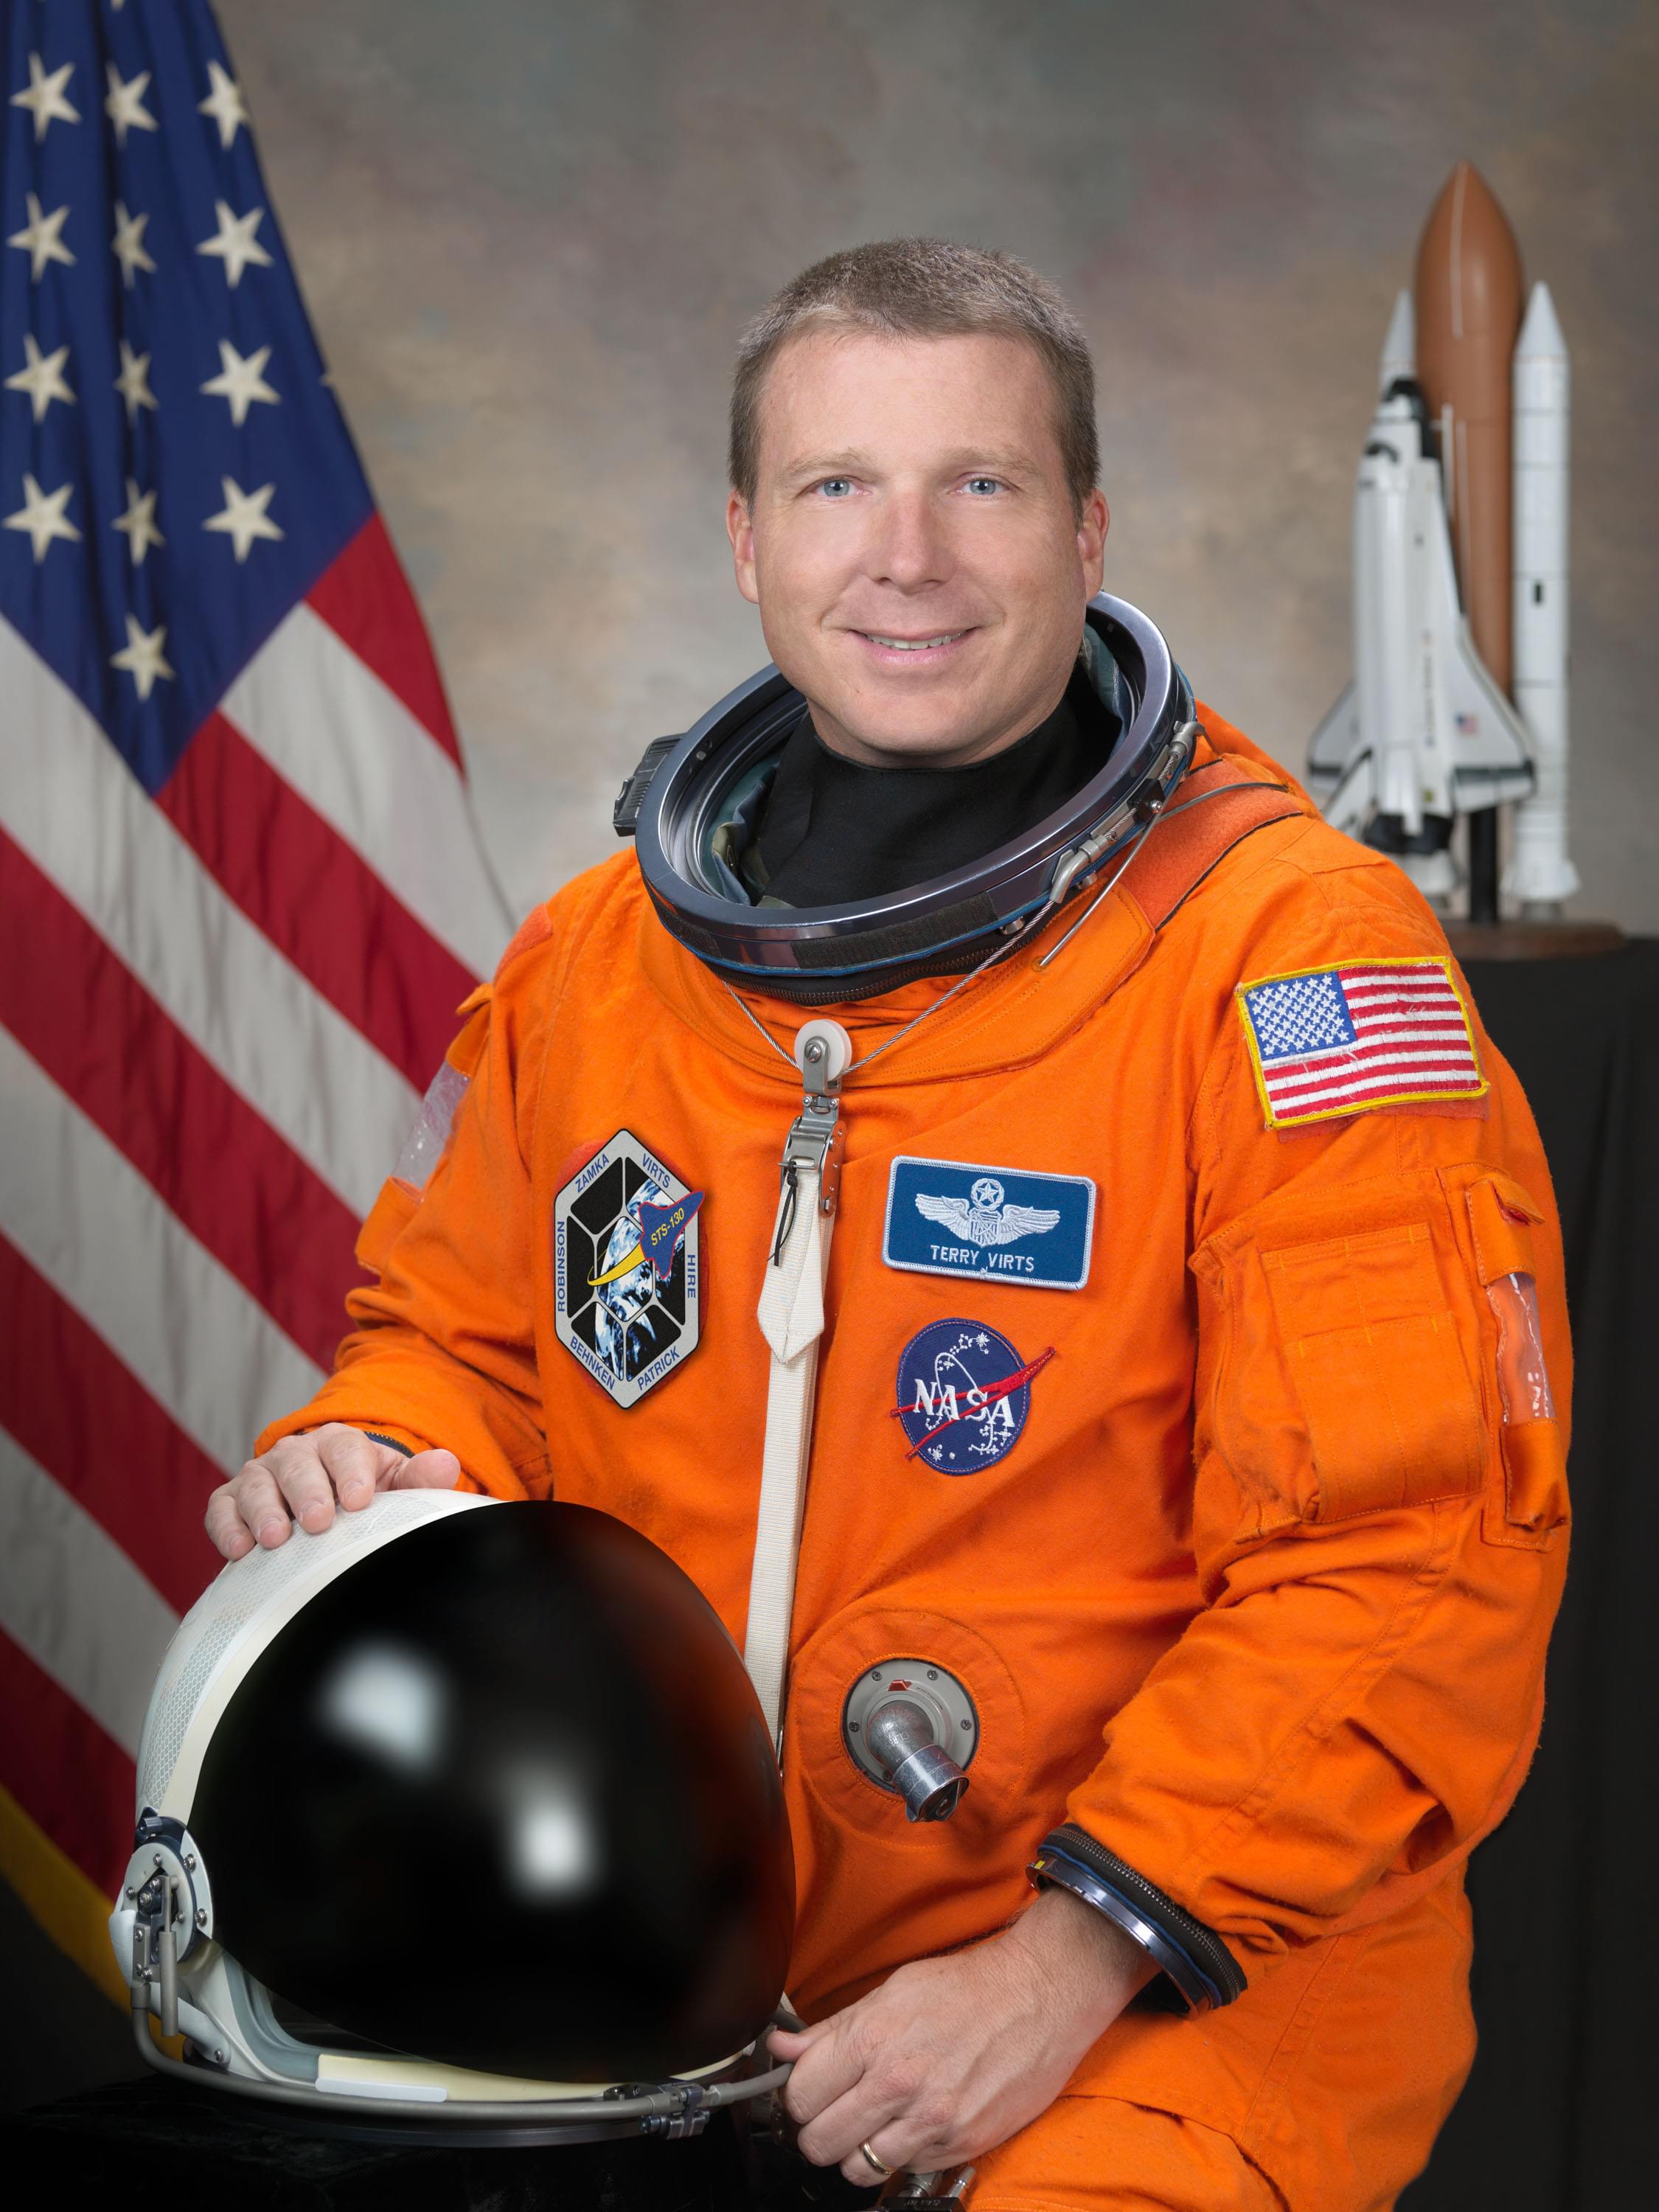 Tuesday, February 23: Astronaut Terry Virts